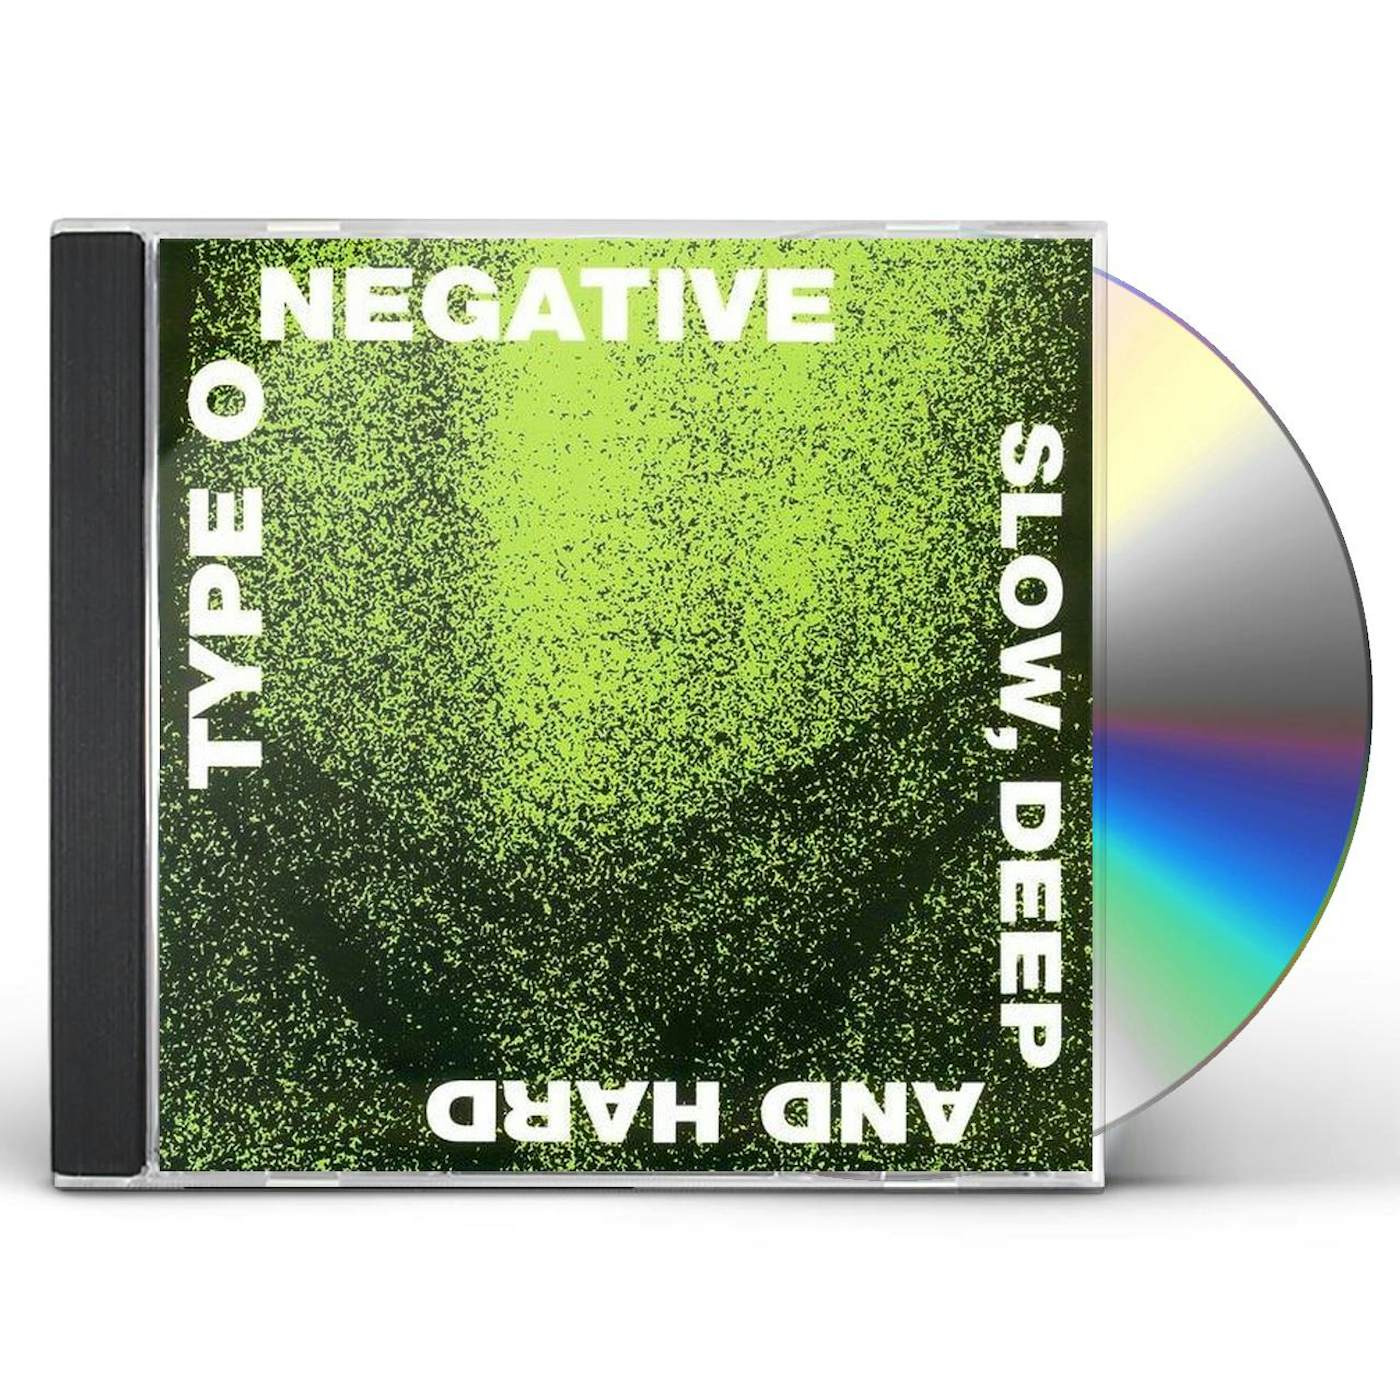 Type O Negative SLOW DEEP & HARD CD $8.49$7.49